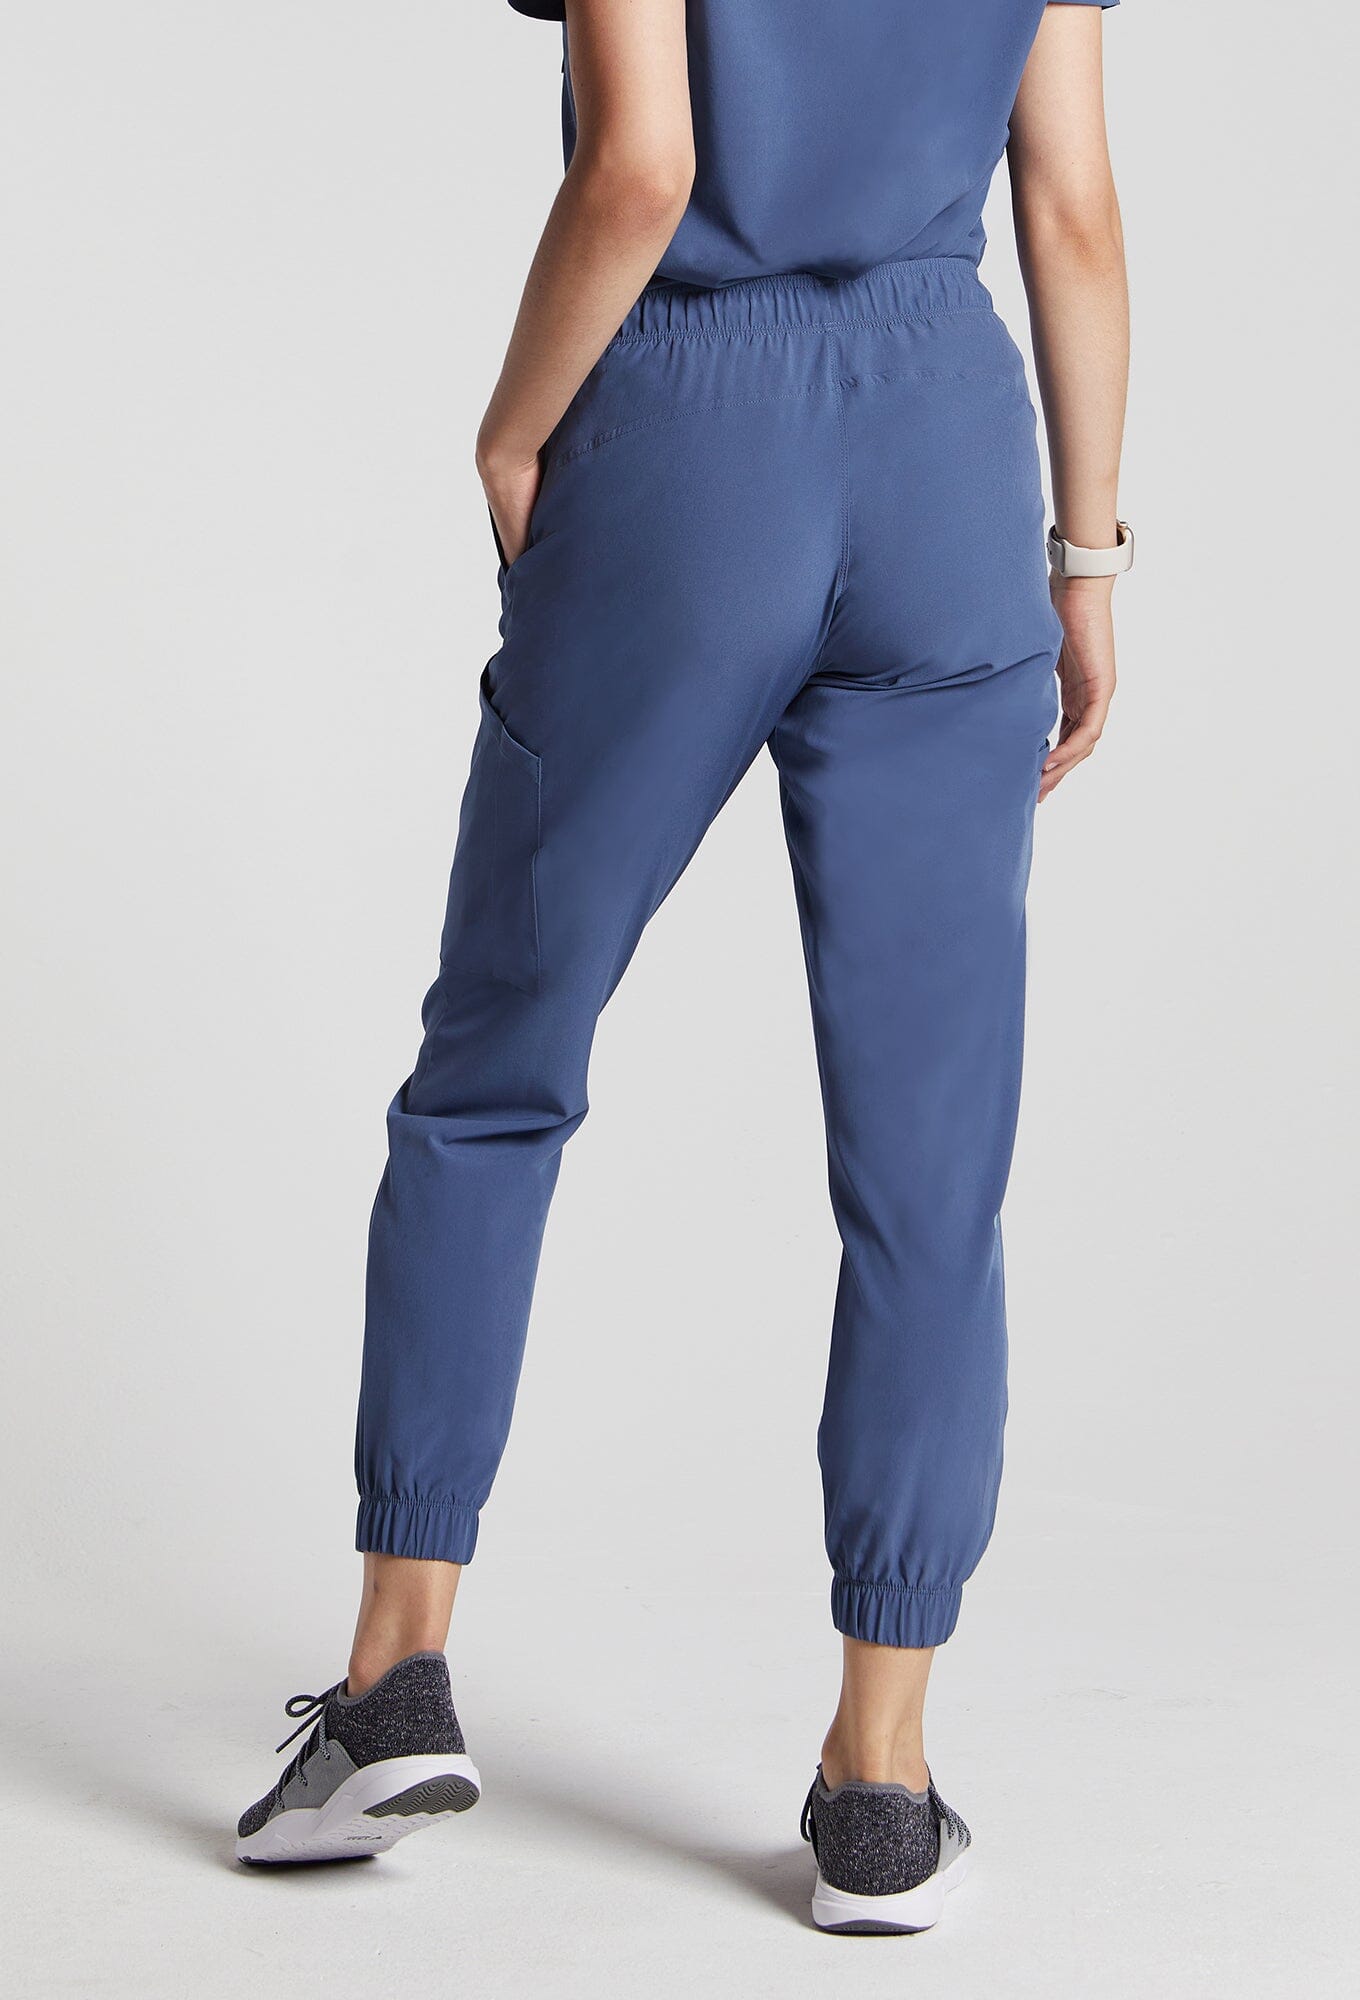 LULULEMON Jogger Pant Drawstring Back Zip Pockets Gray Women’s Size 2